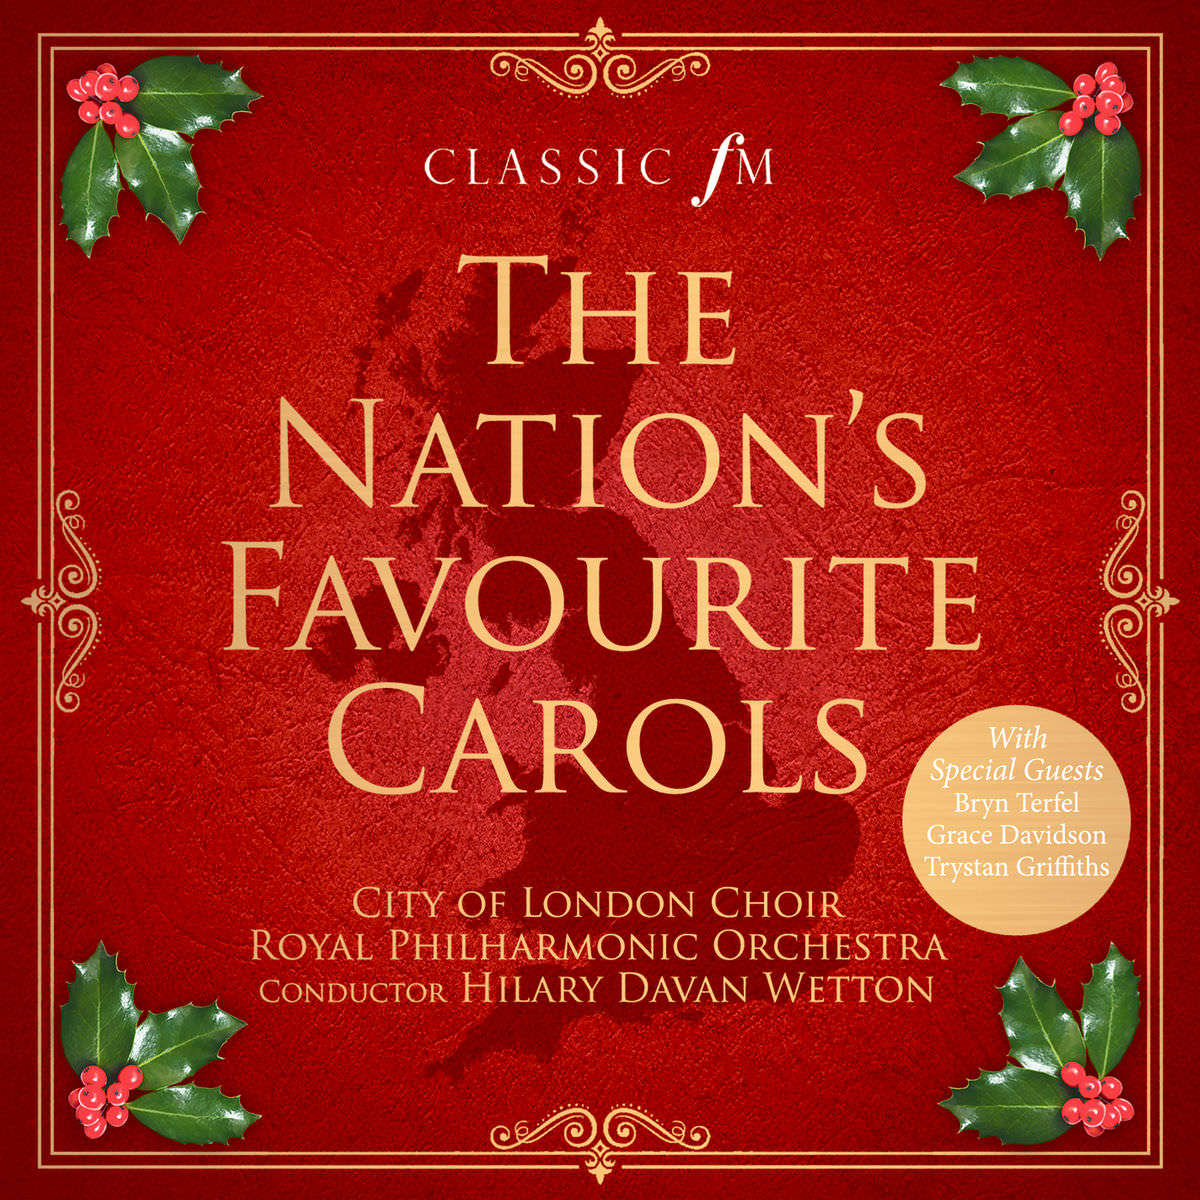 City of London Choir, Royal Philharmonic Orchestra & Hilary Davan Wetton – The Nation’s Favourite Carols (2017) [Qobuz FLAC 24bit/96kHz]